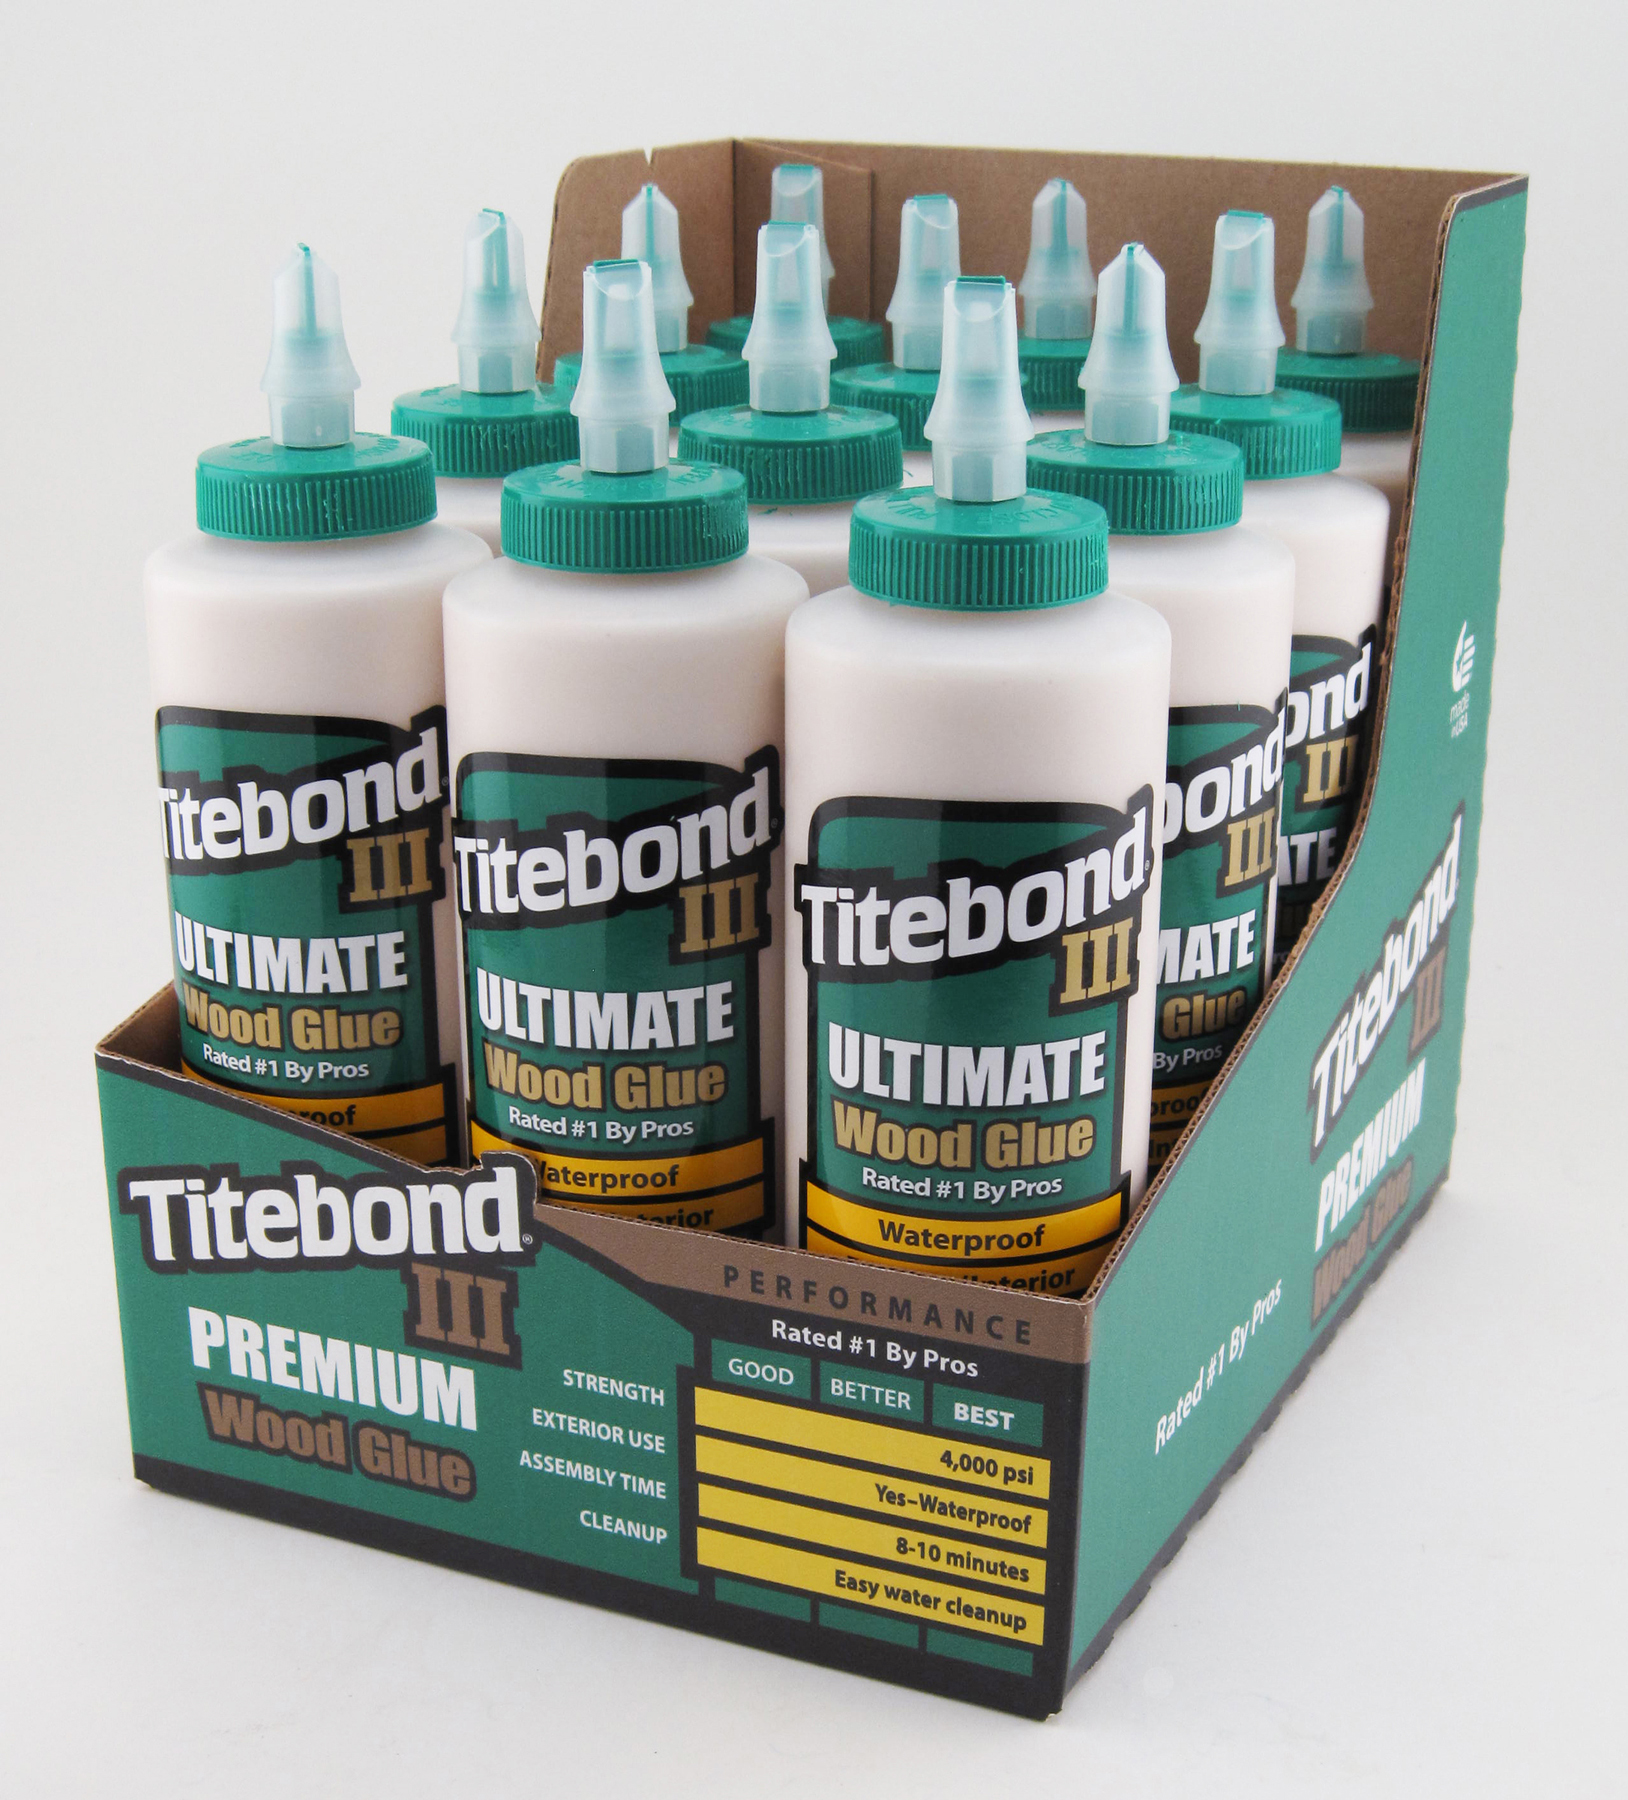 The new merchandising cartons for store shelves display Titebond's Performance Meter.